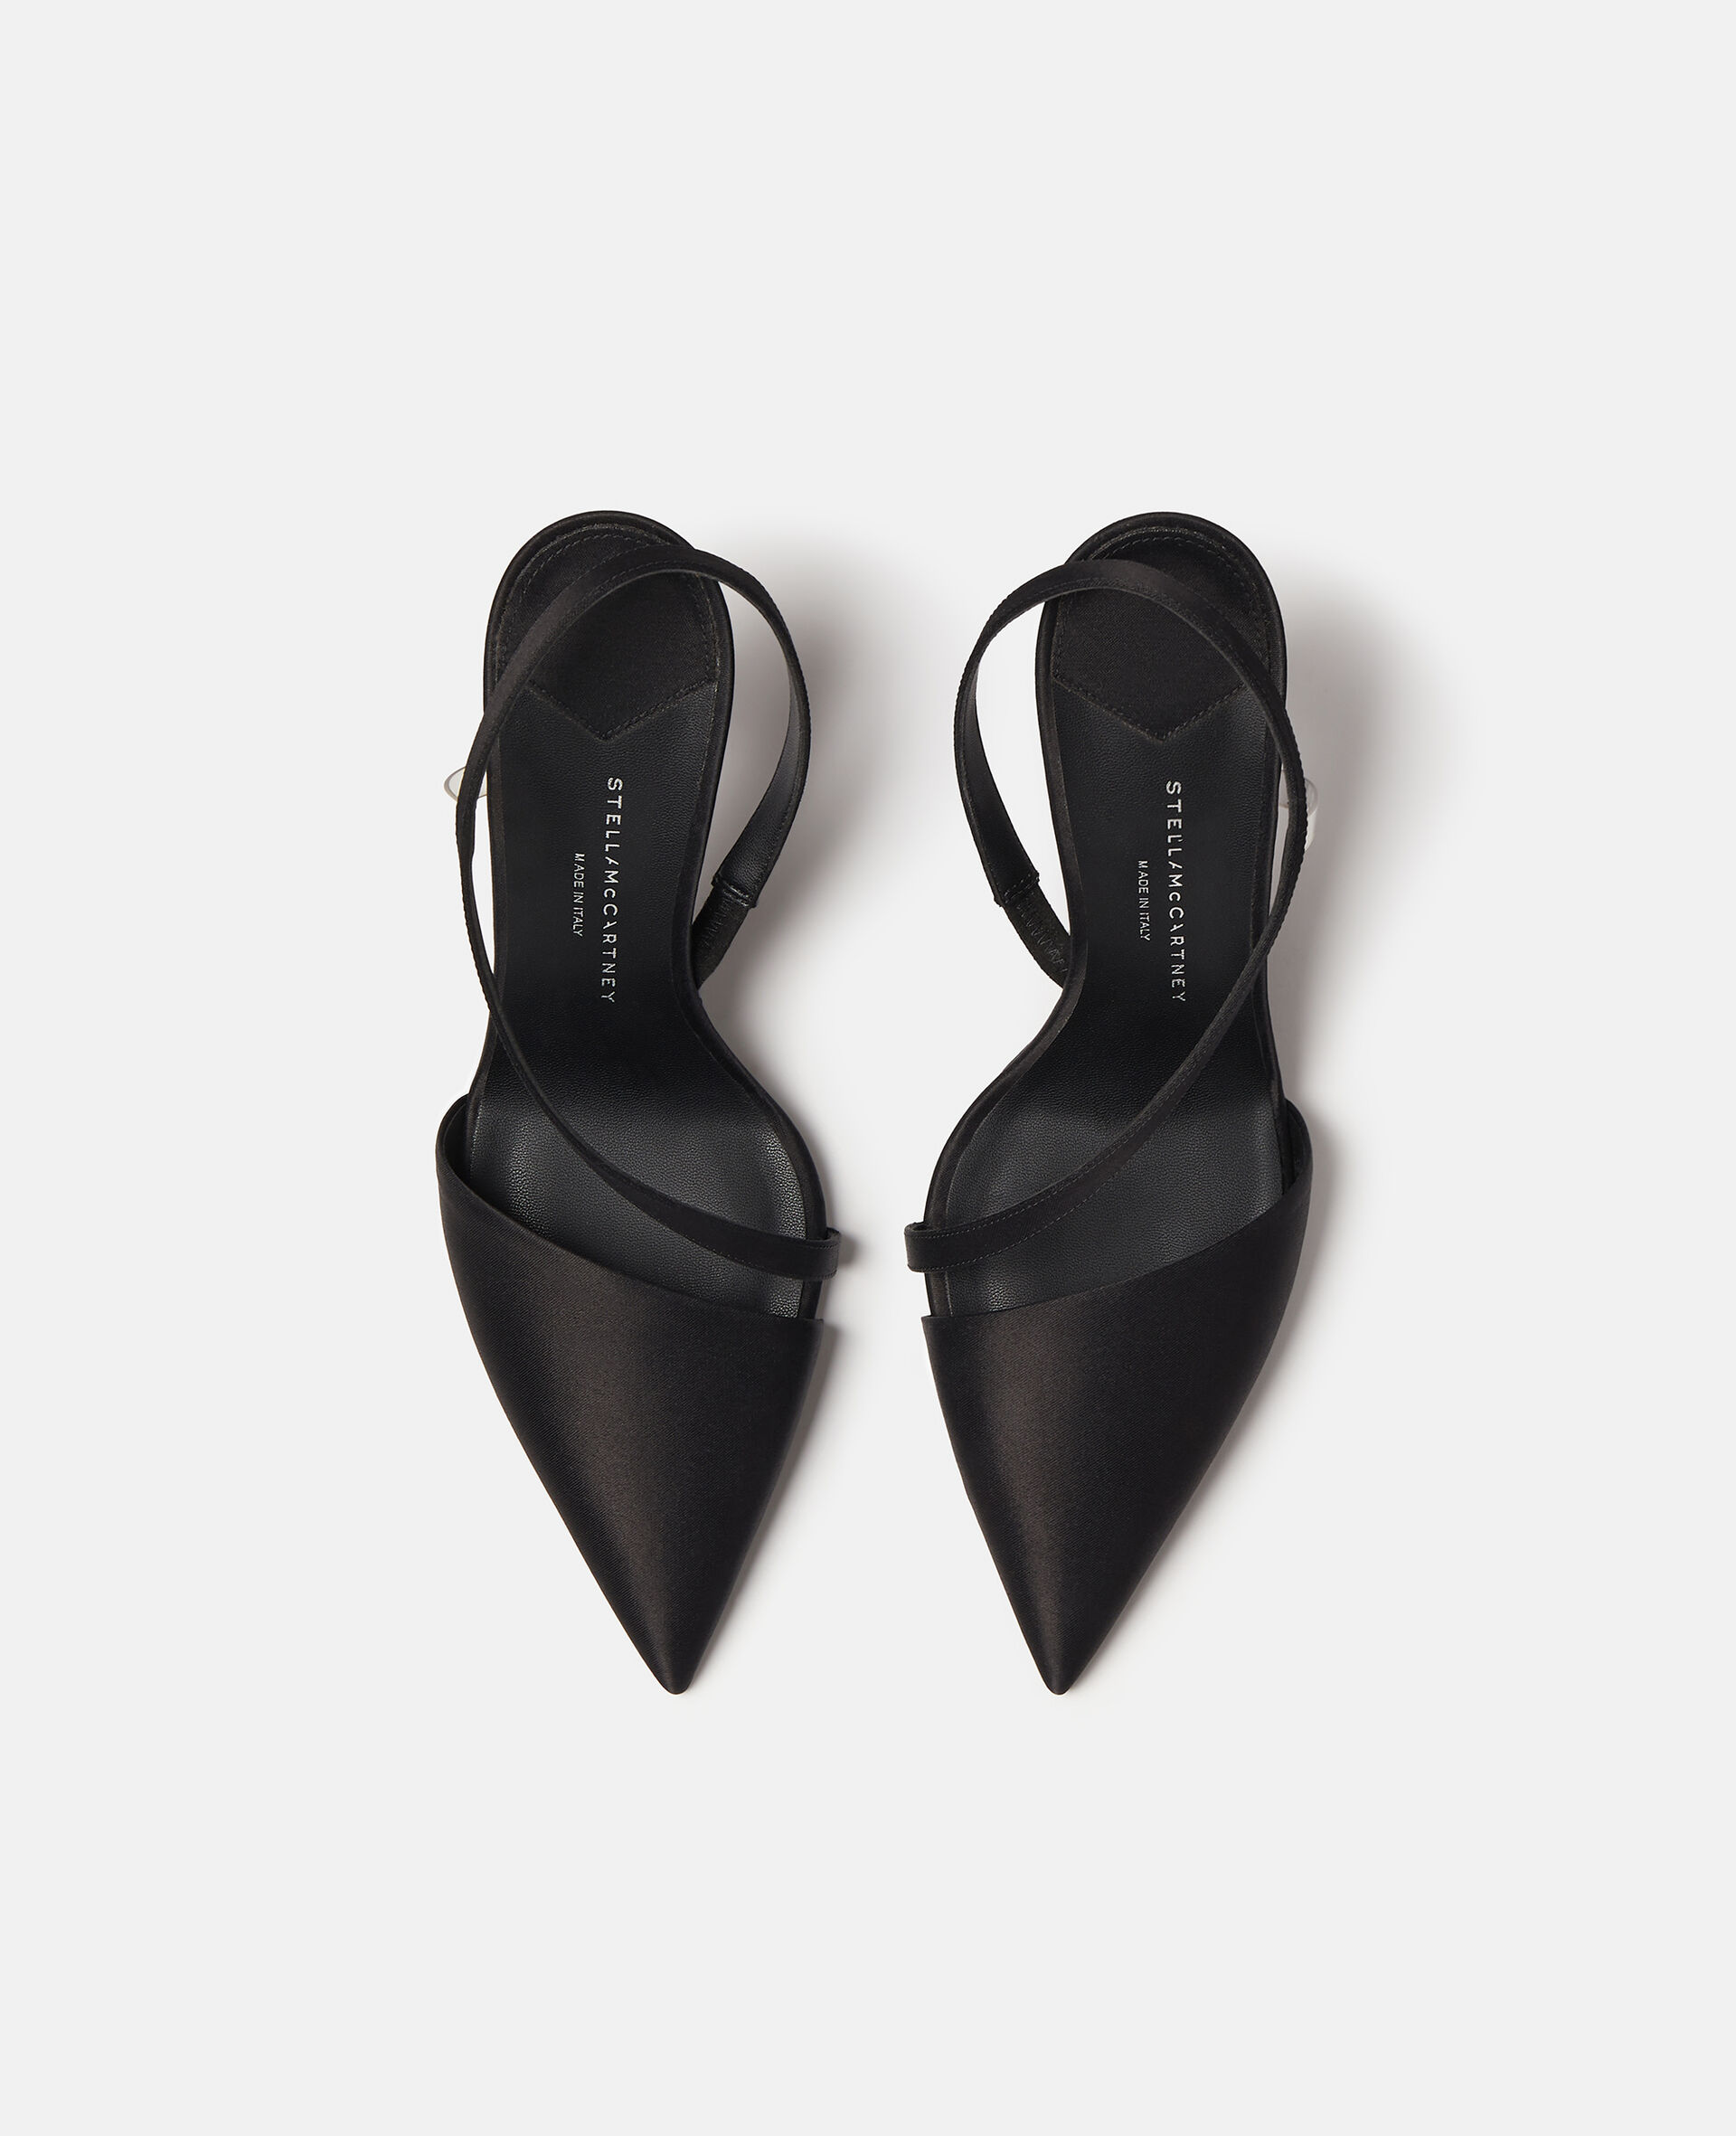 Stella McCartney Falabella Flat Sandals - Women